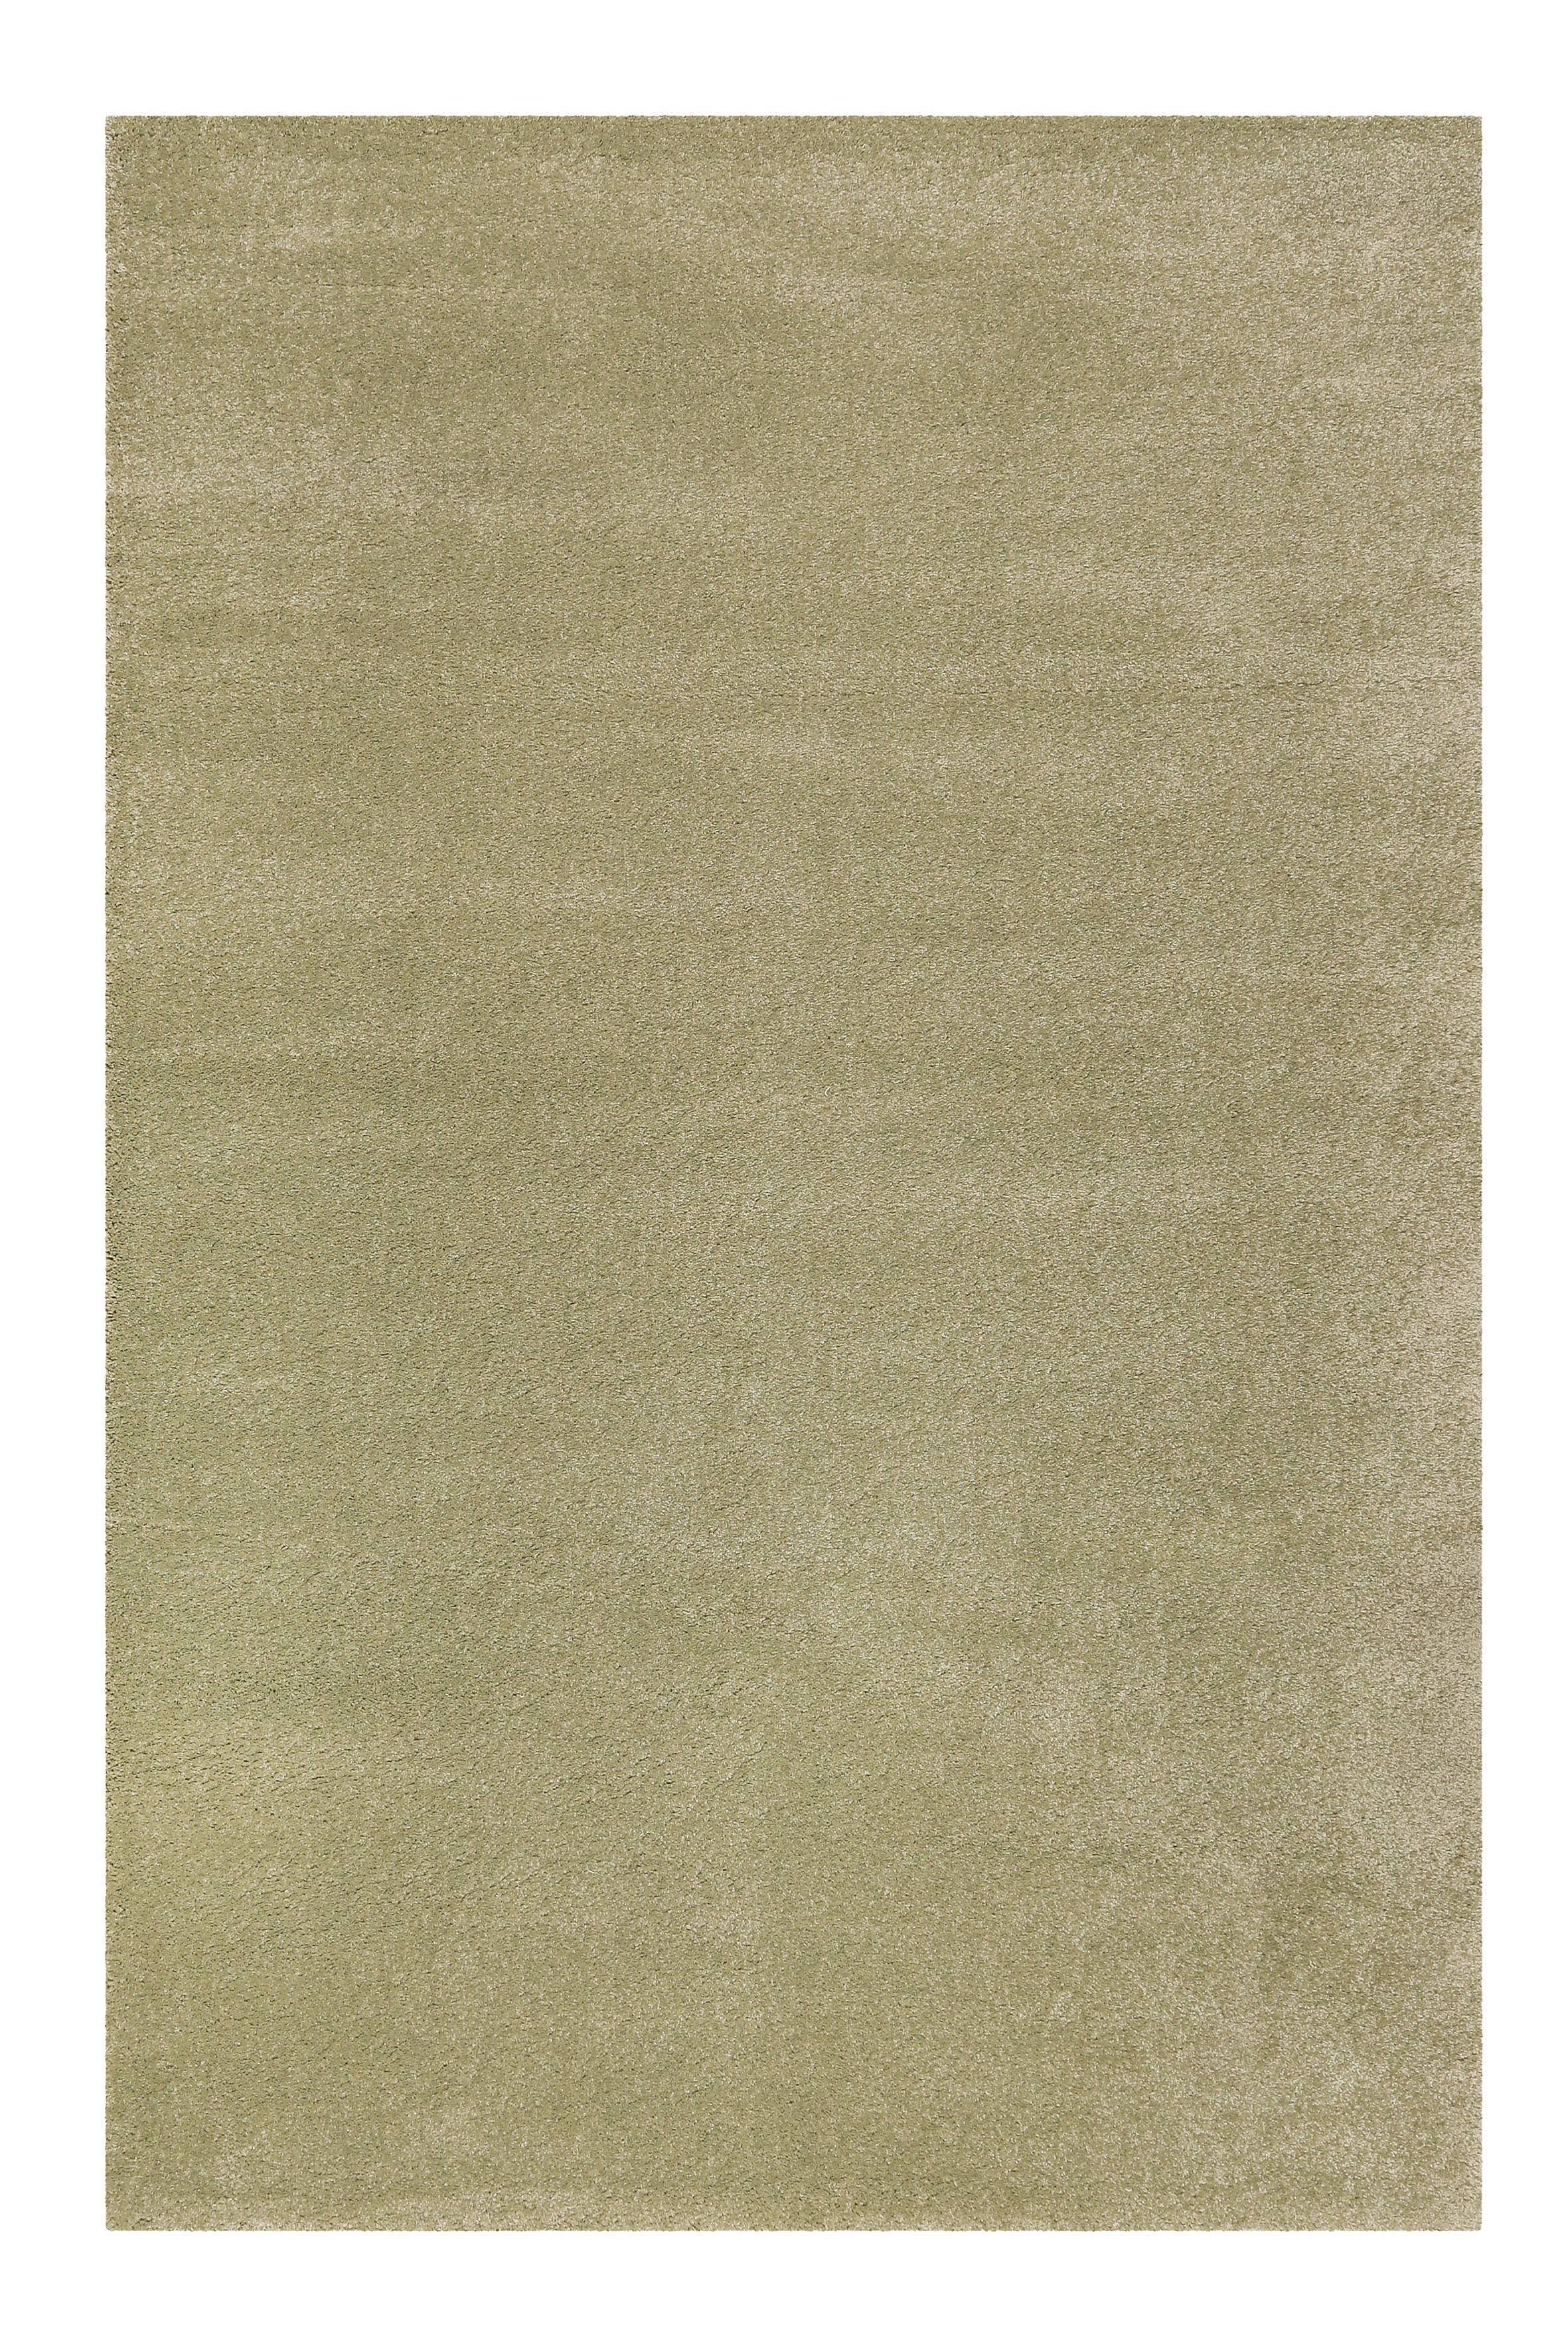 WEBTEPPICH  80/150 cm  Mintgrün   - Mintgrün, KONVENTIONELL, Textil (80/150cm) - Esprit